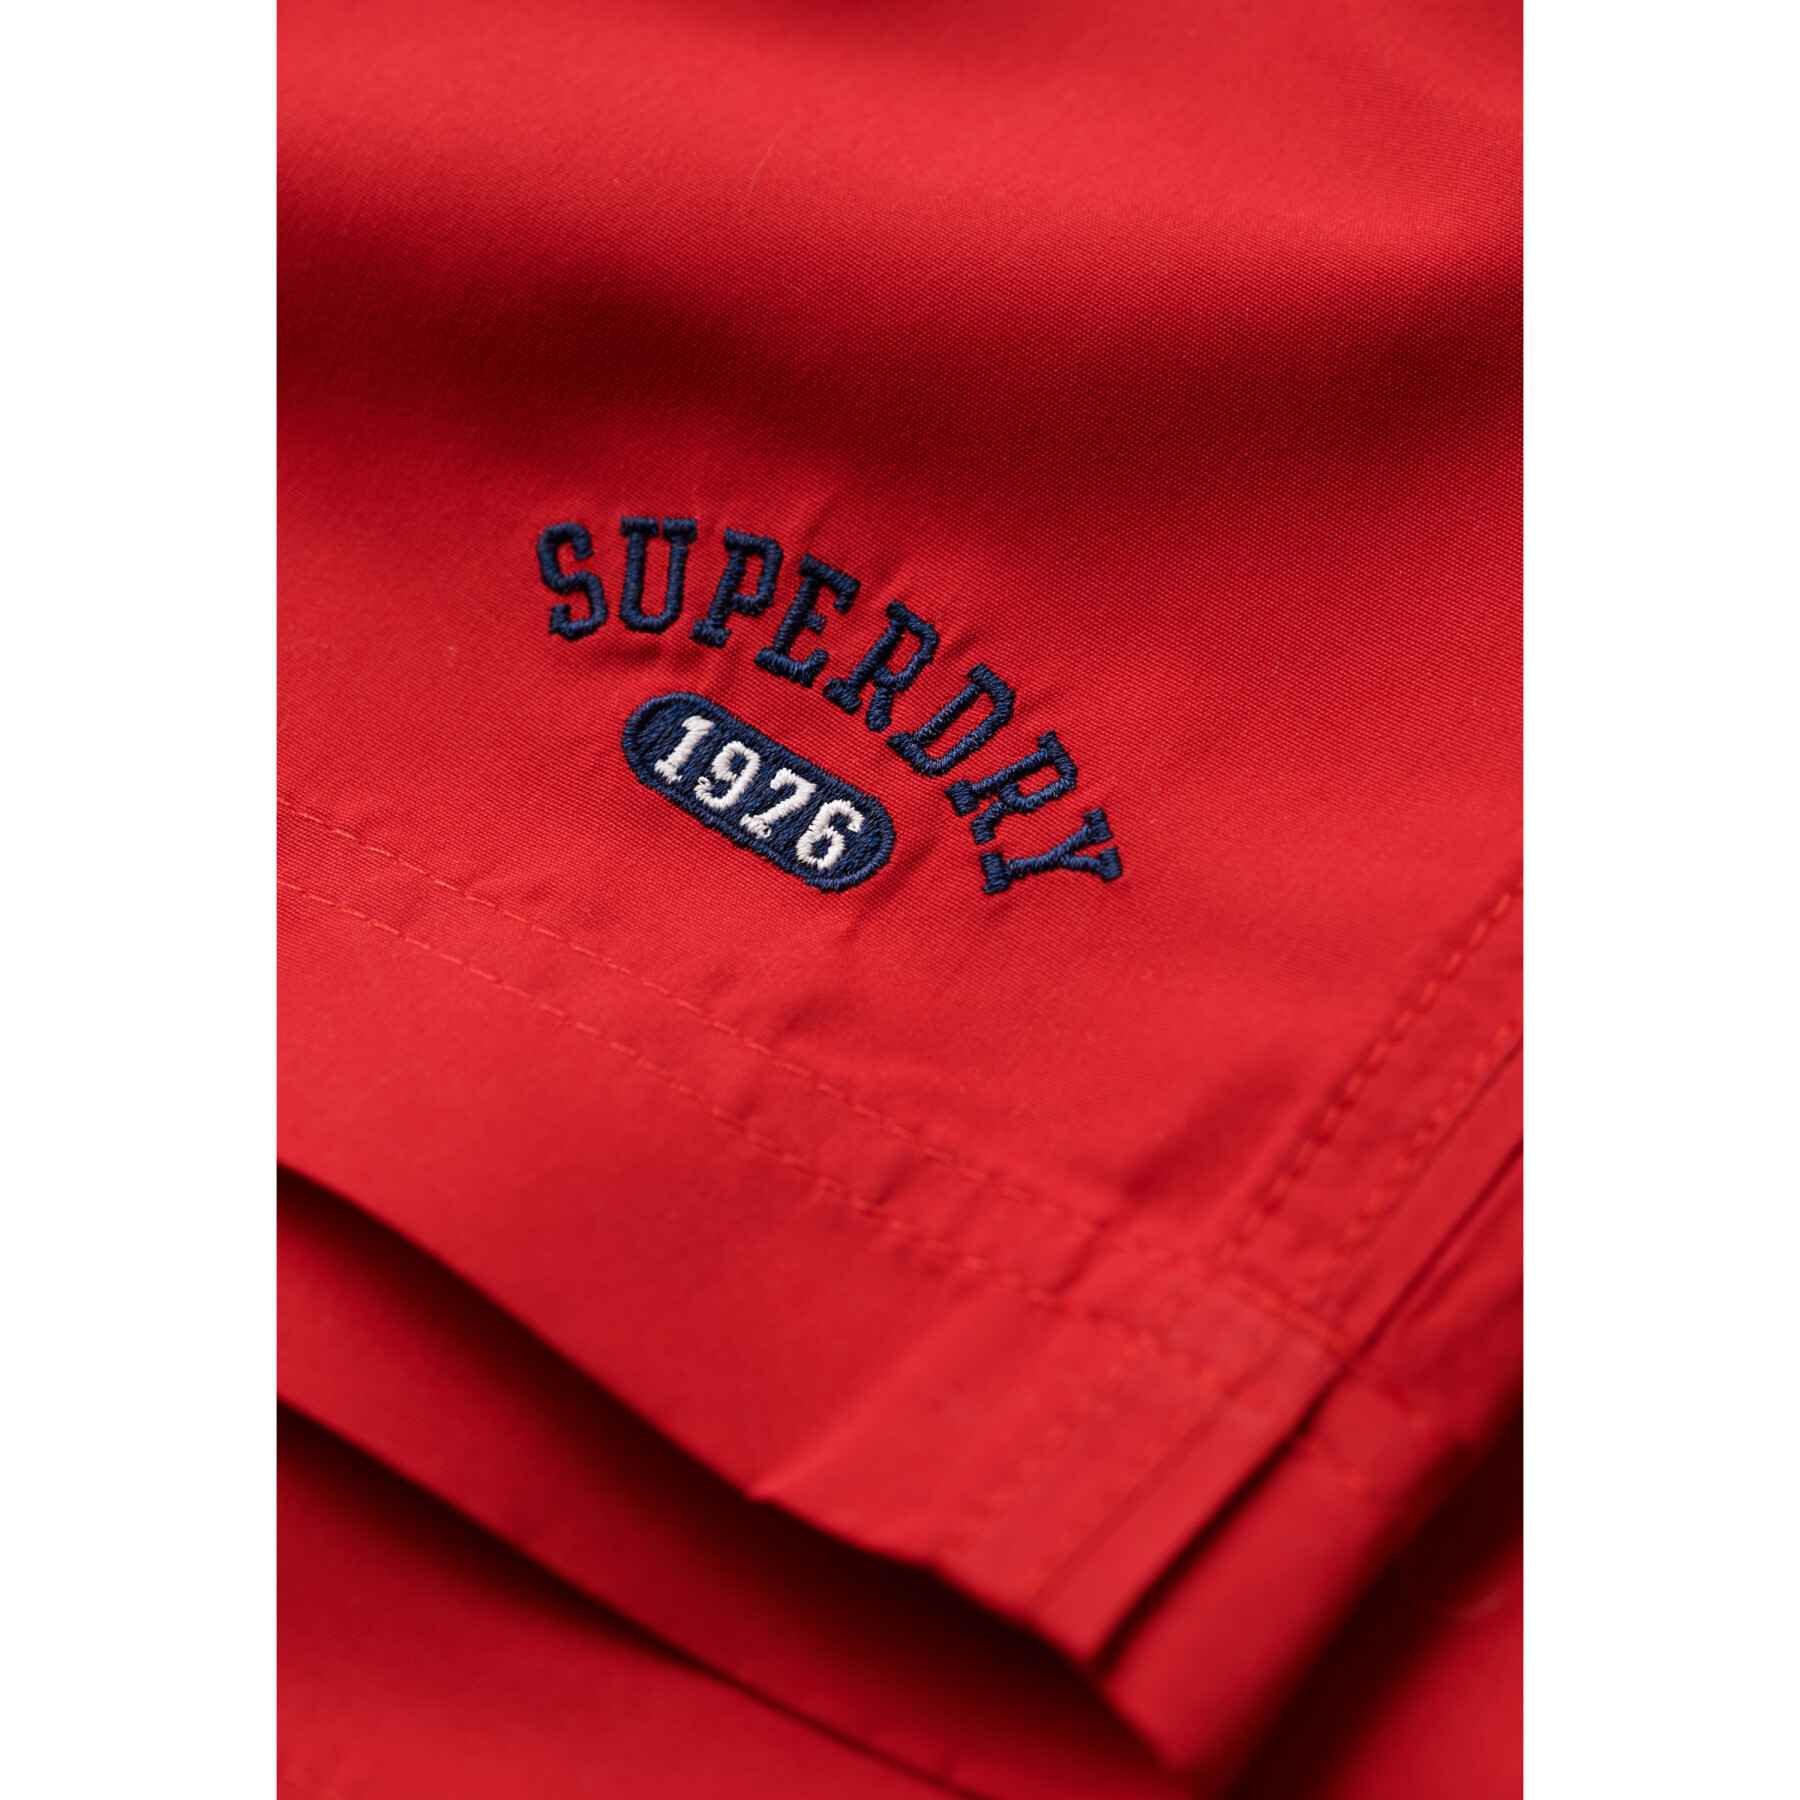 Polo swim shorts Superdry